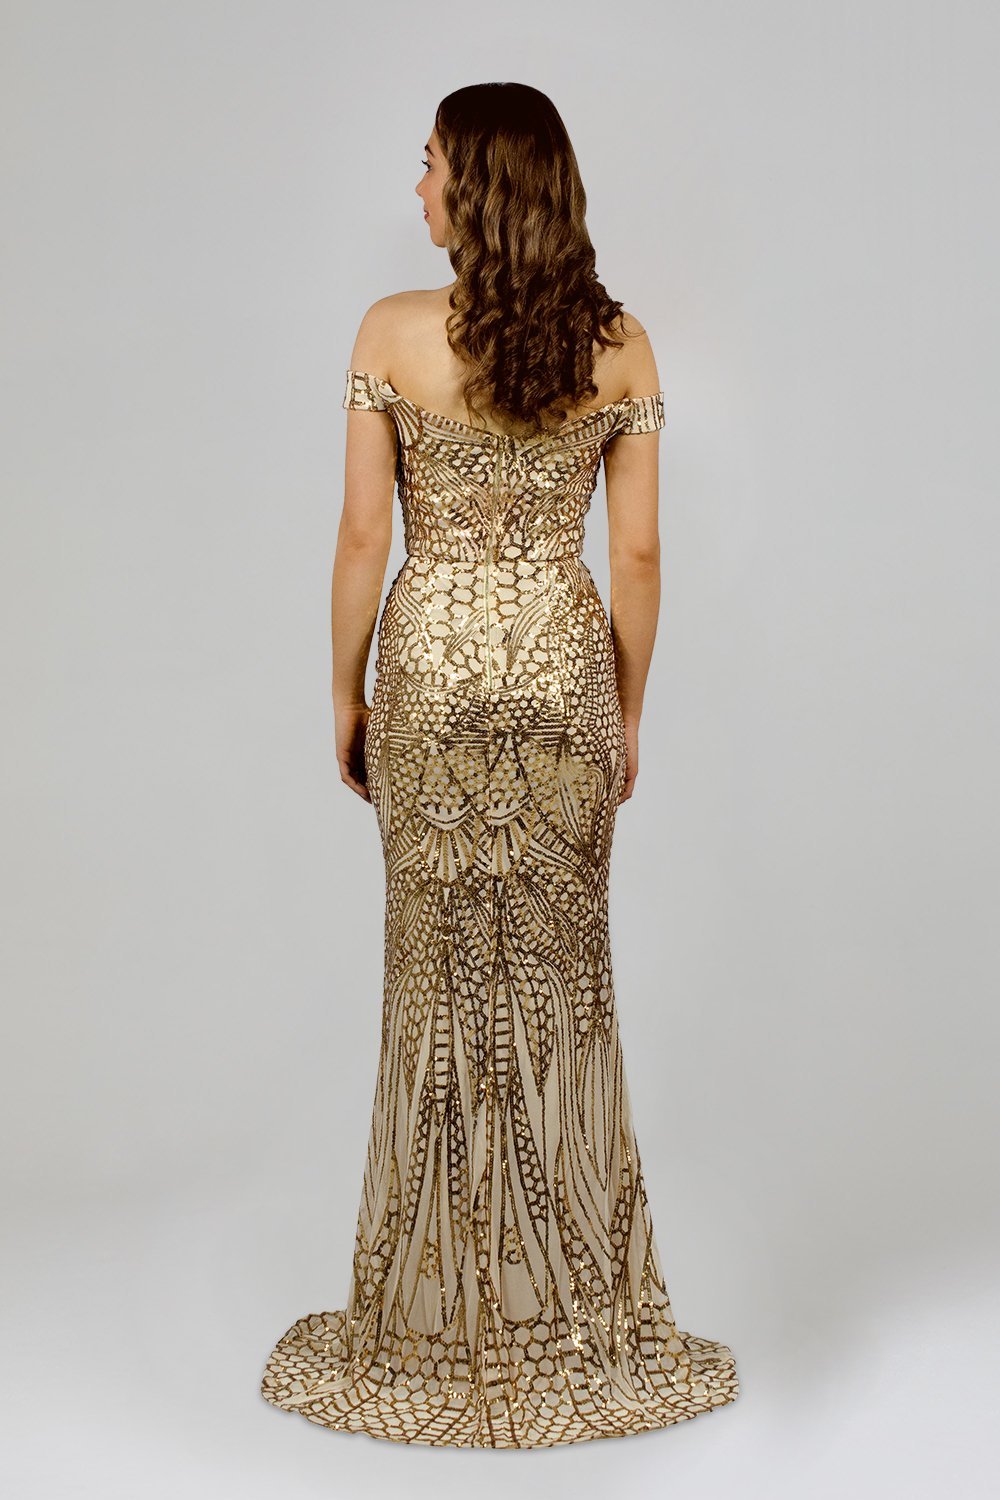 gold sequin formal bridesmaid dresses perth australia custom made envious bridal & formal